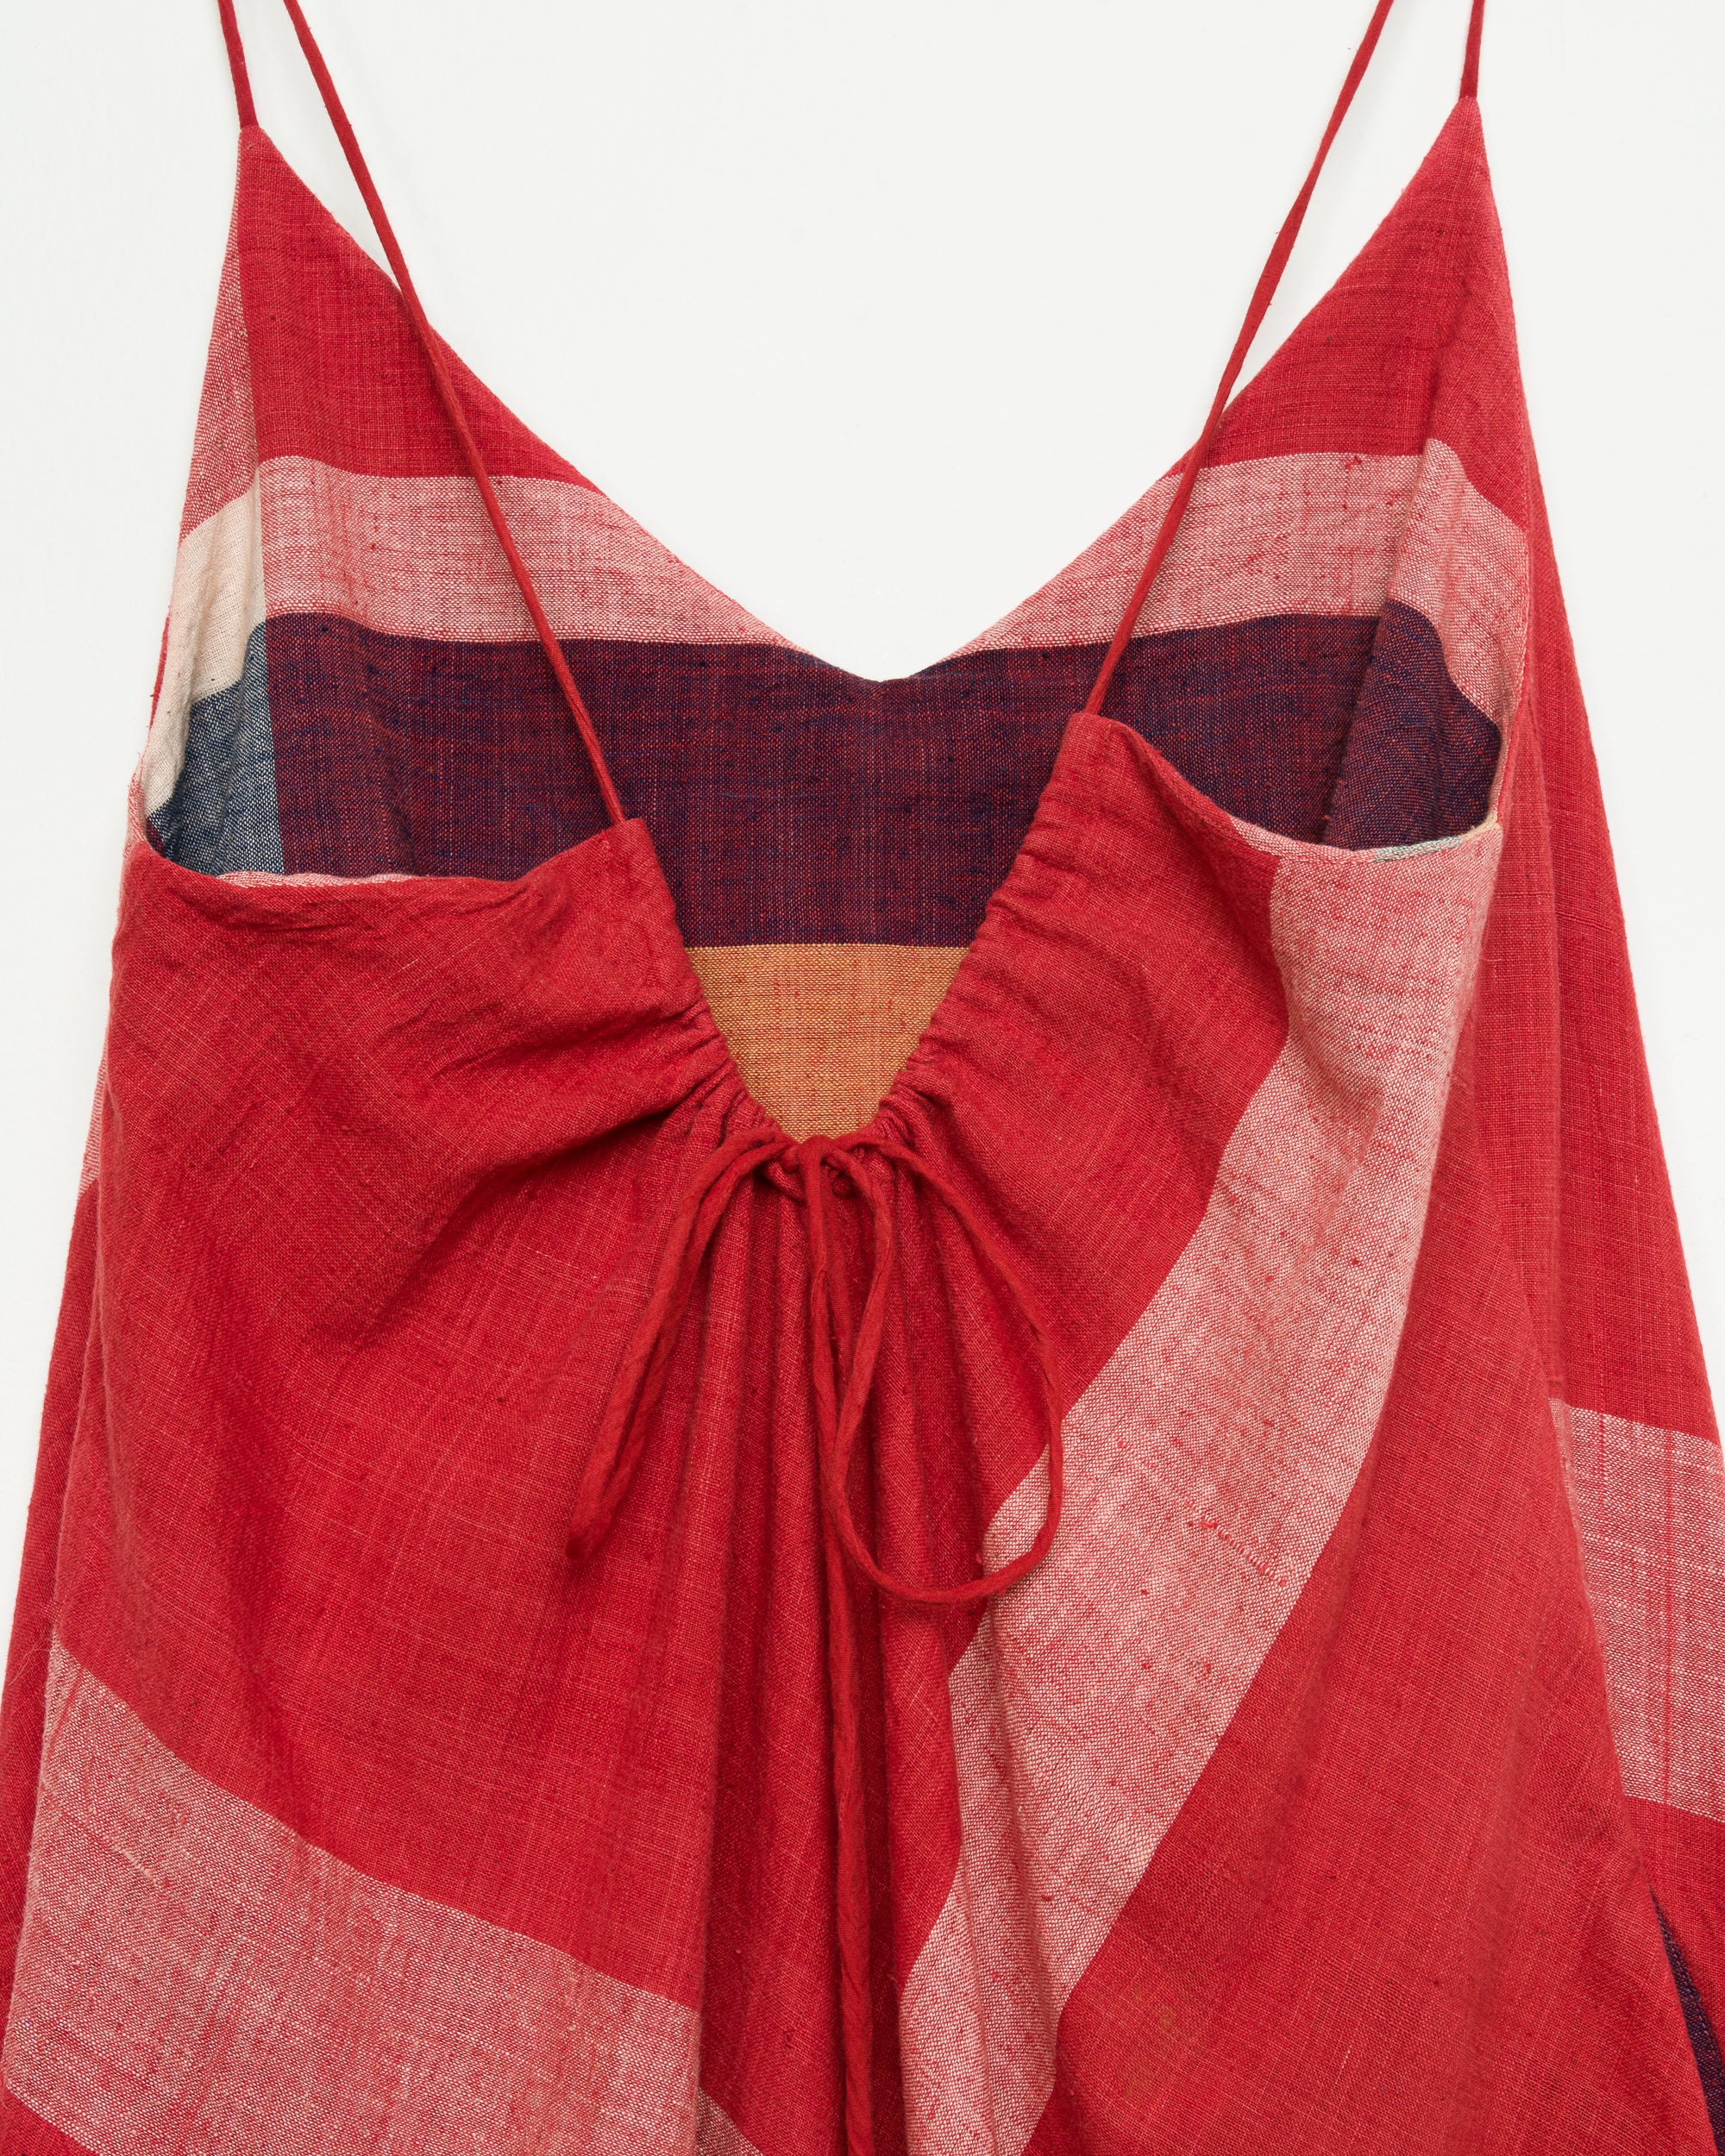 Sadie Camisole Dress in Red Madras Plaid